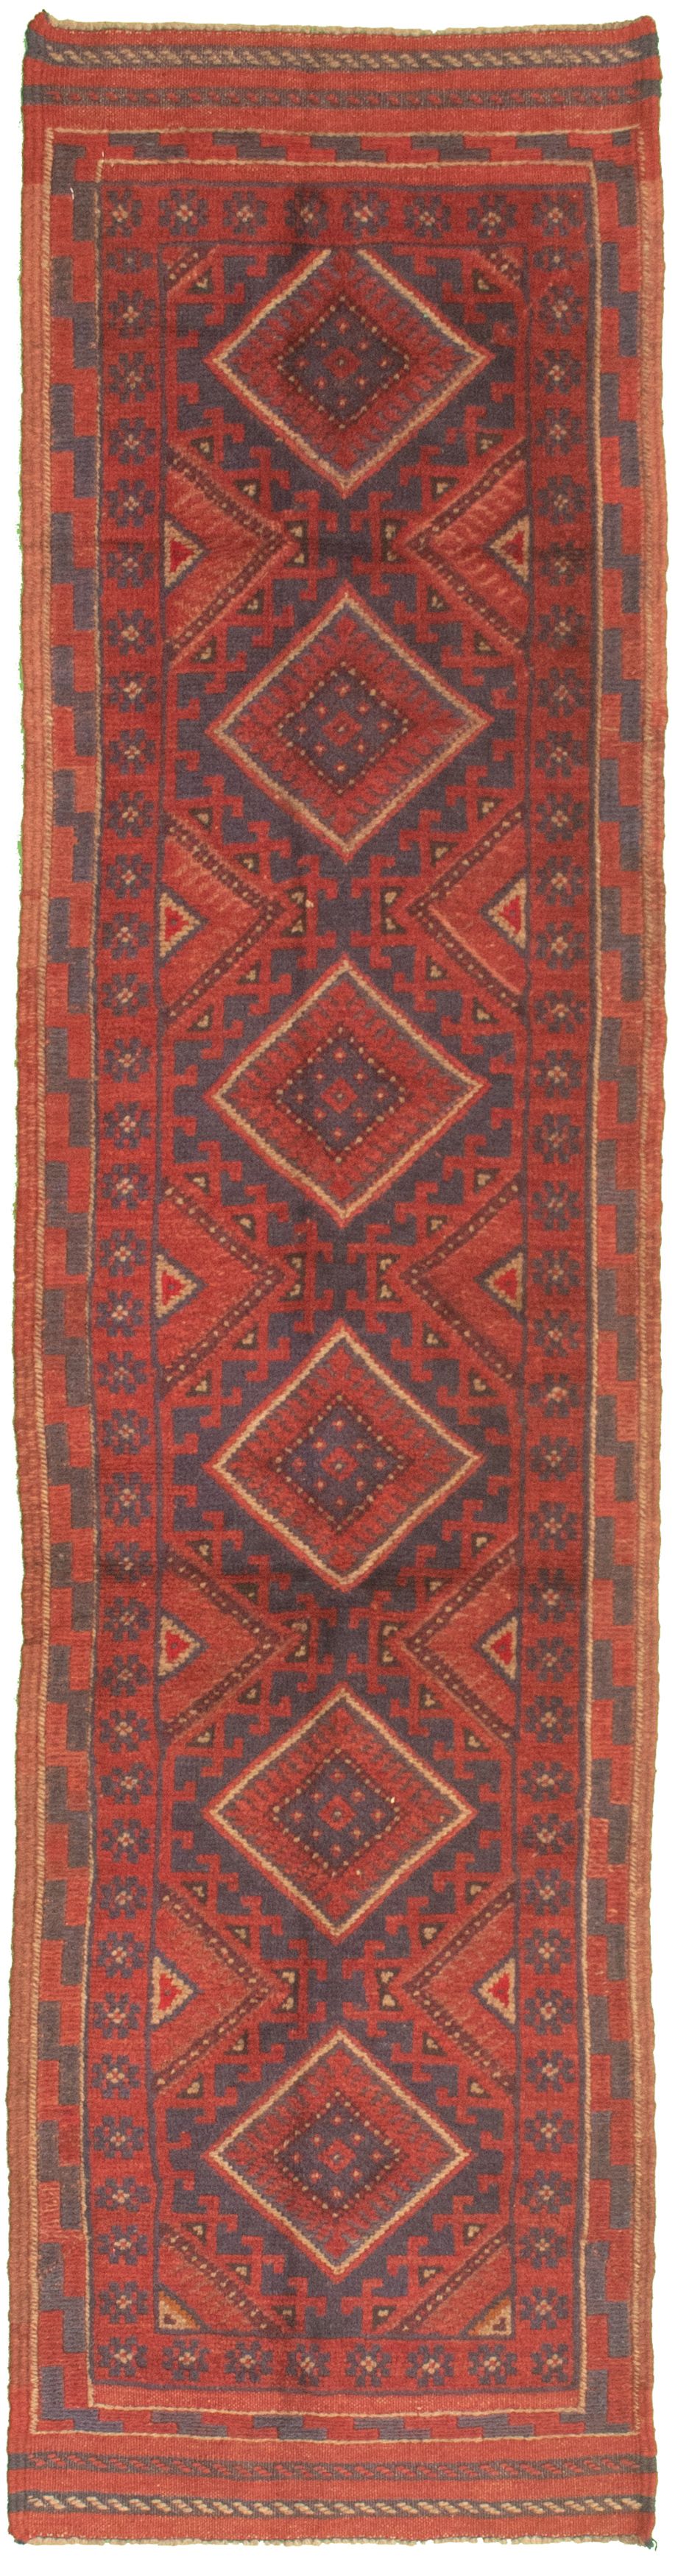 Hand-knotted Tajik Caucasian Red Wool Rug 1'11" x 8'4"  Size: 1'11" x 8'4"  